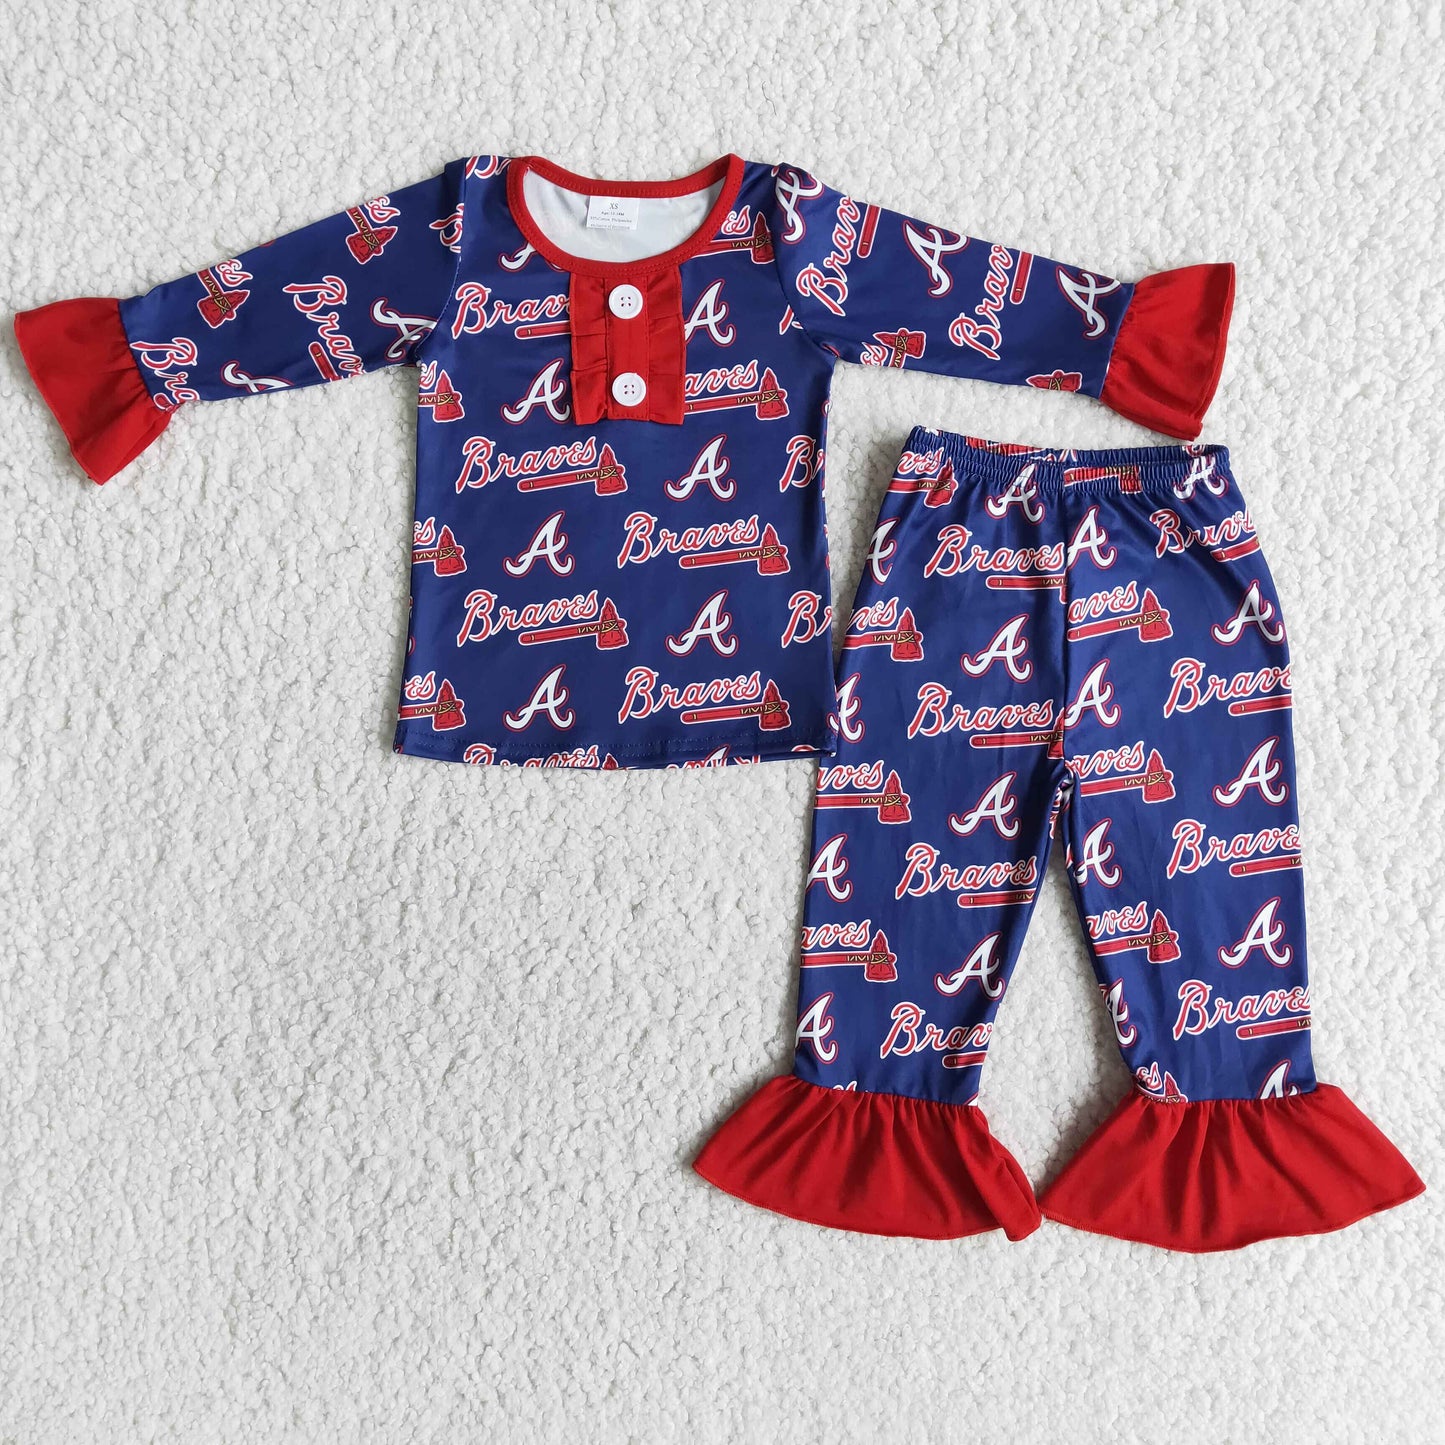 Braves print ruffle long sleeve girls team pajamas